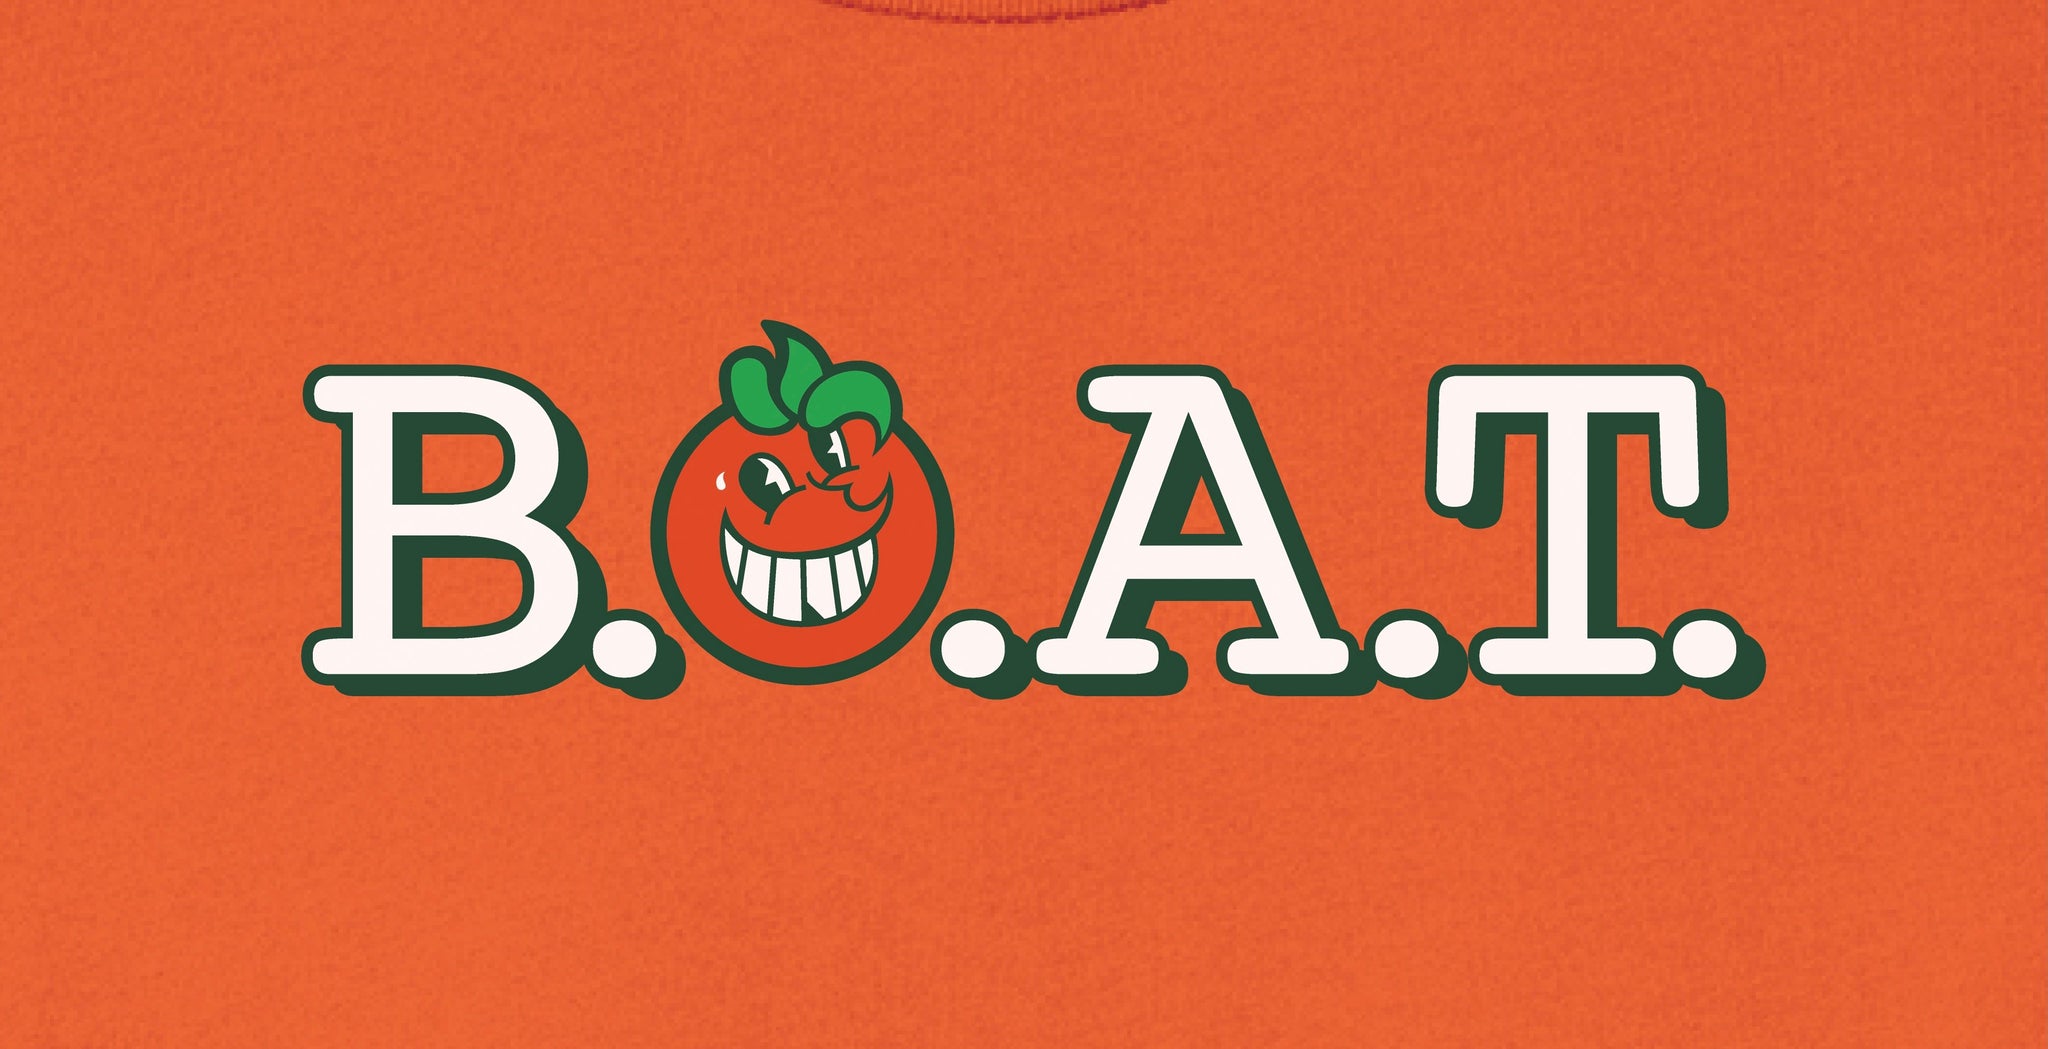 Atomik X B.O.A.T. Kid's Orange Bowl T-Shirt